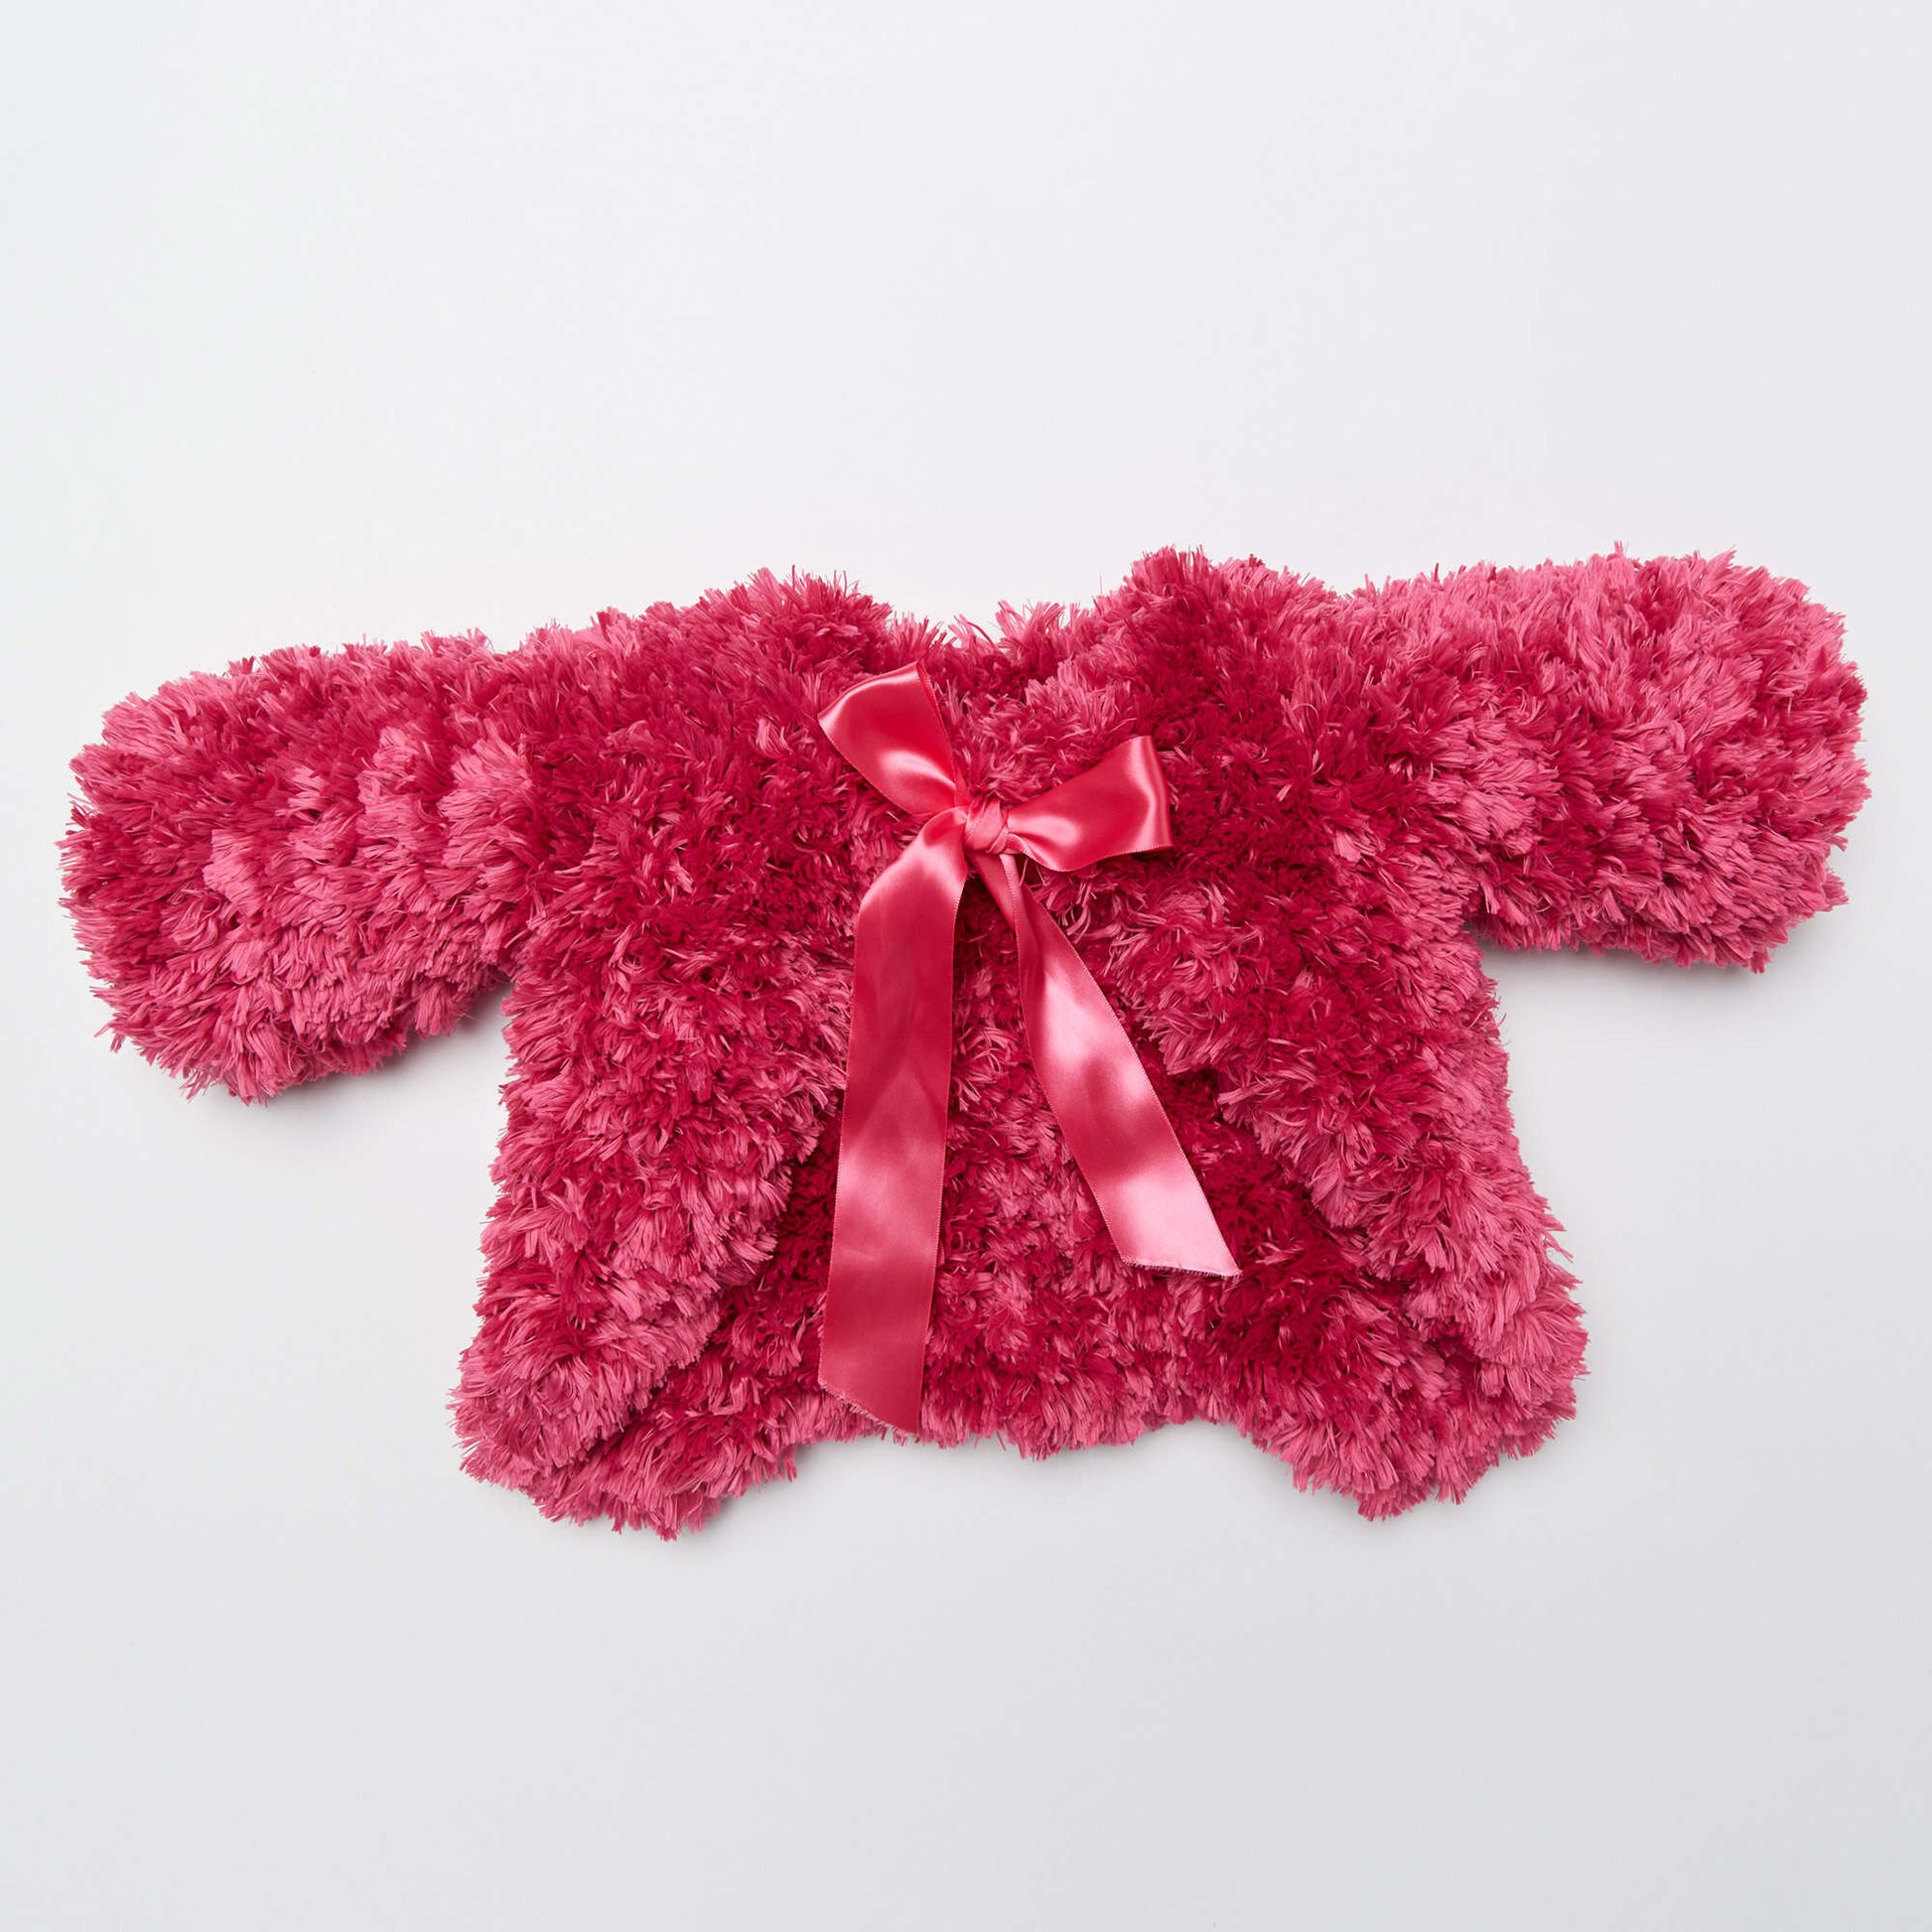 Free Red Heart Girls' Fashion Fur Shrug Knit Pattern